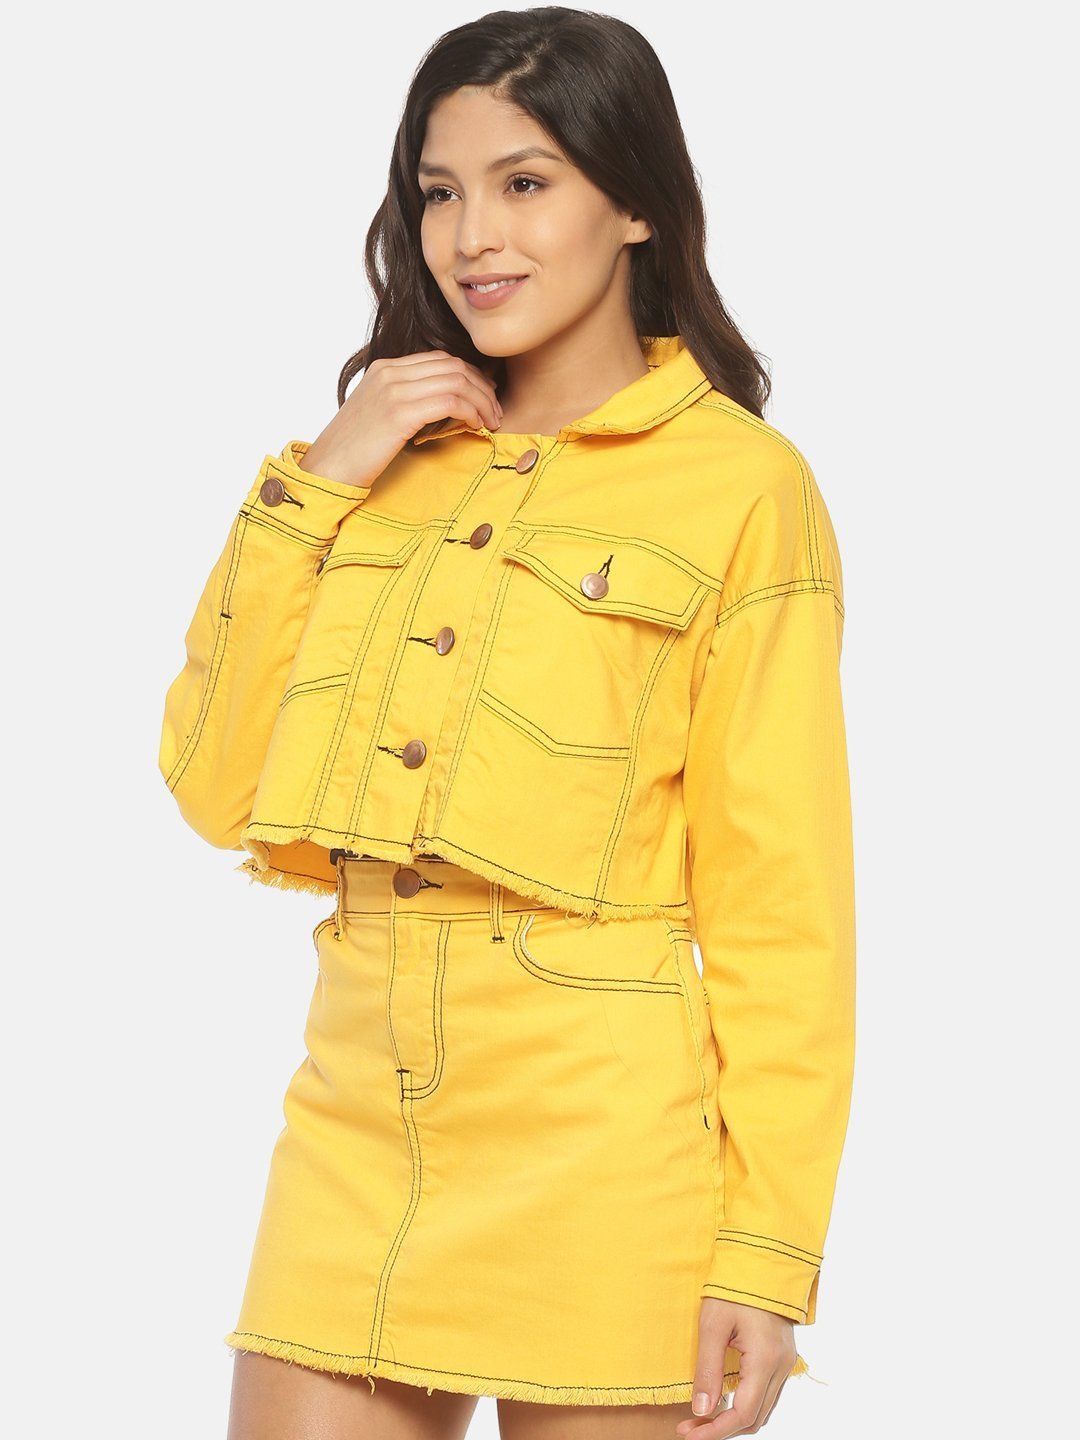 IS.U Yellow Oversized Crop Denim Jacket